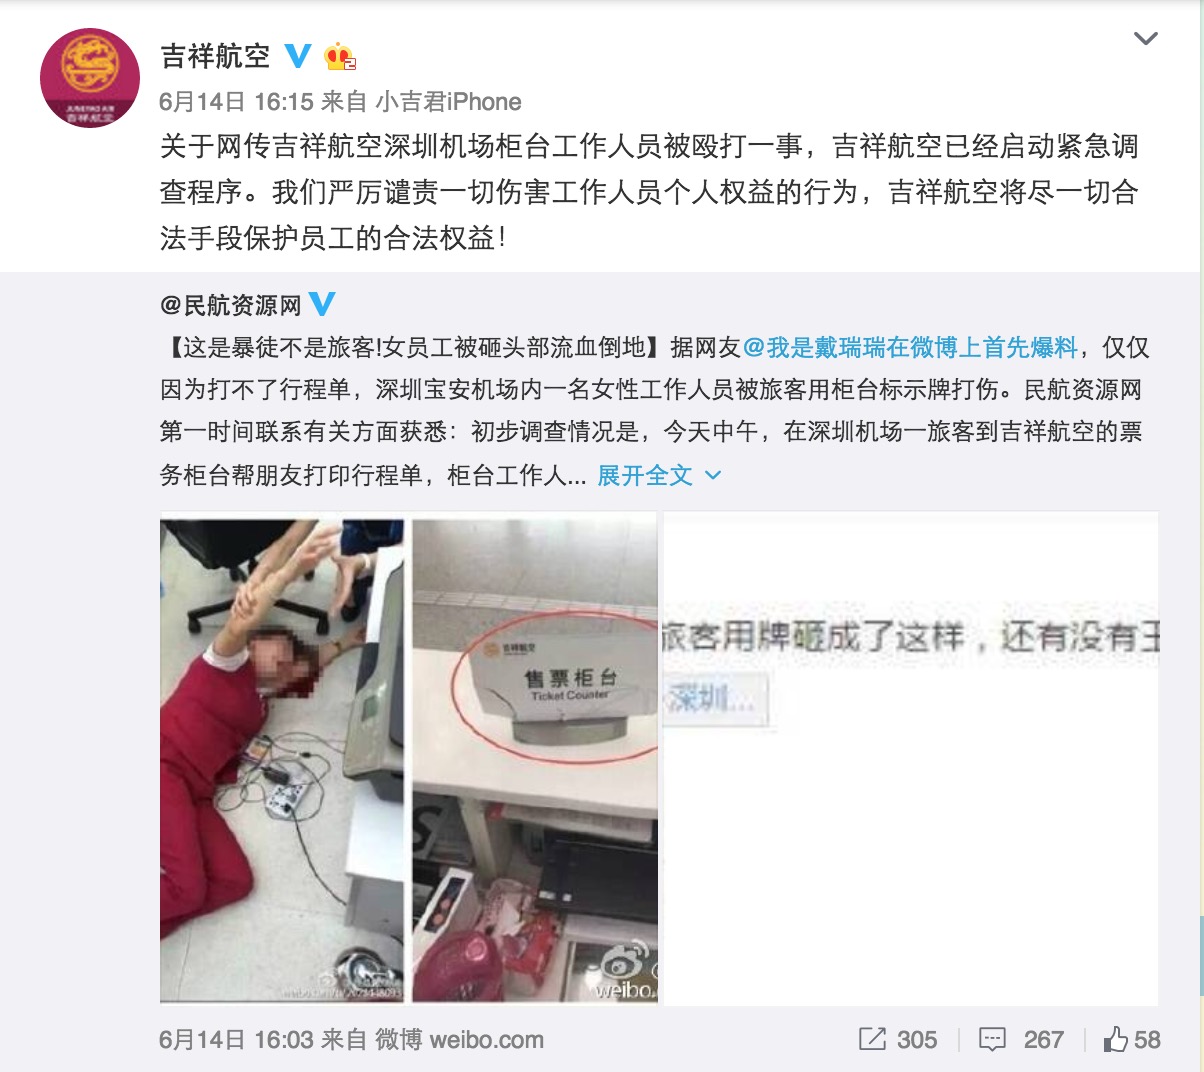 jixiang airlines weibo response